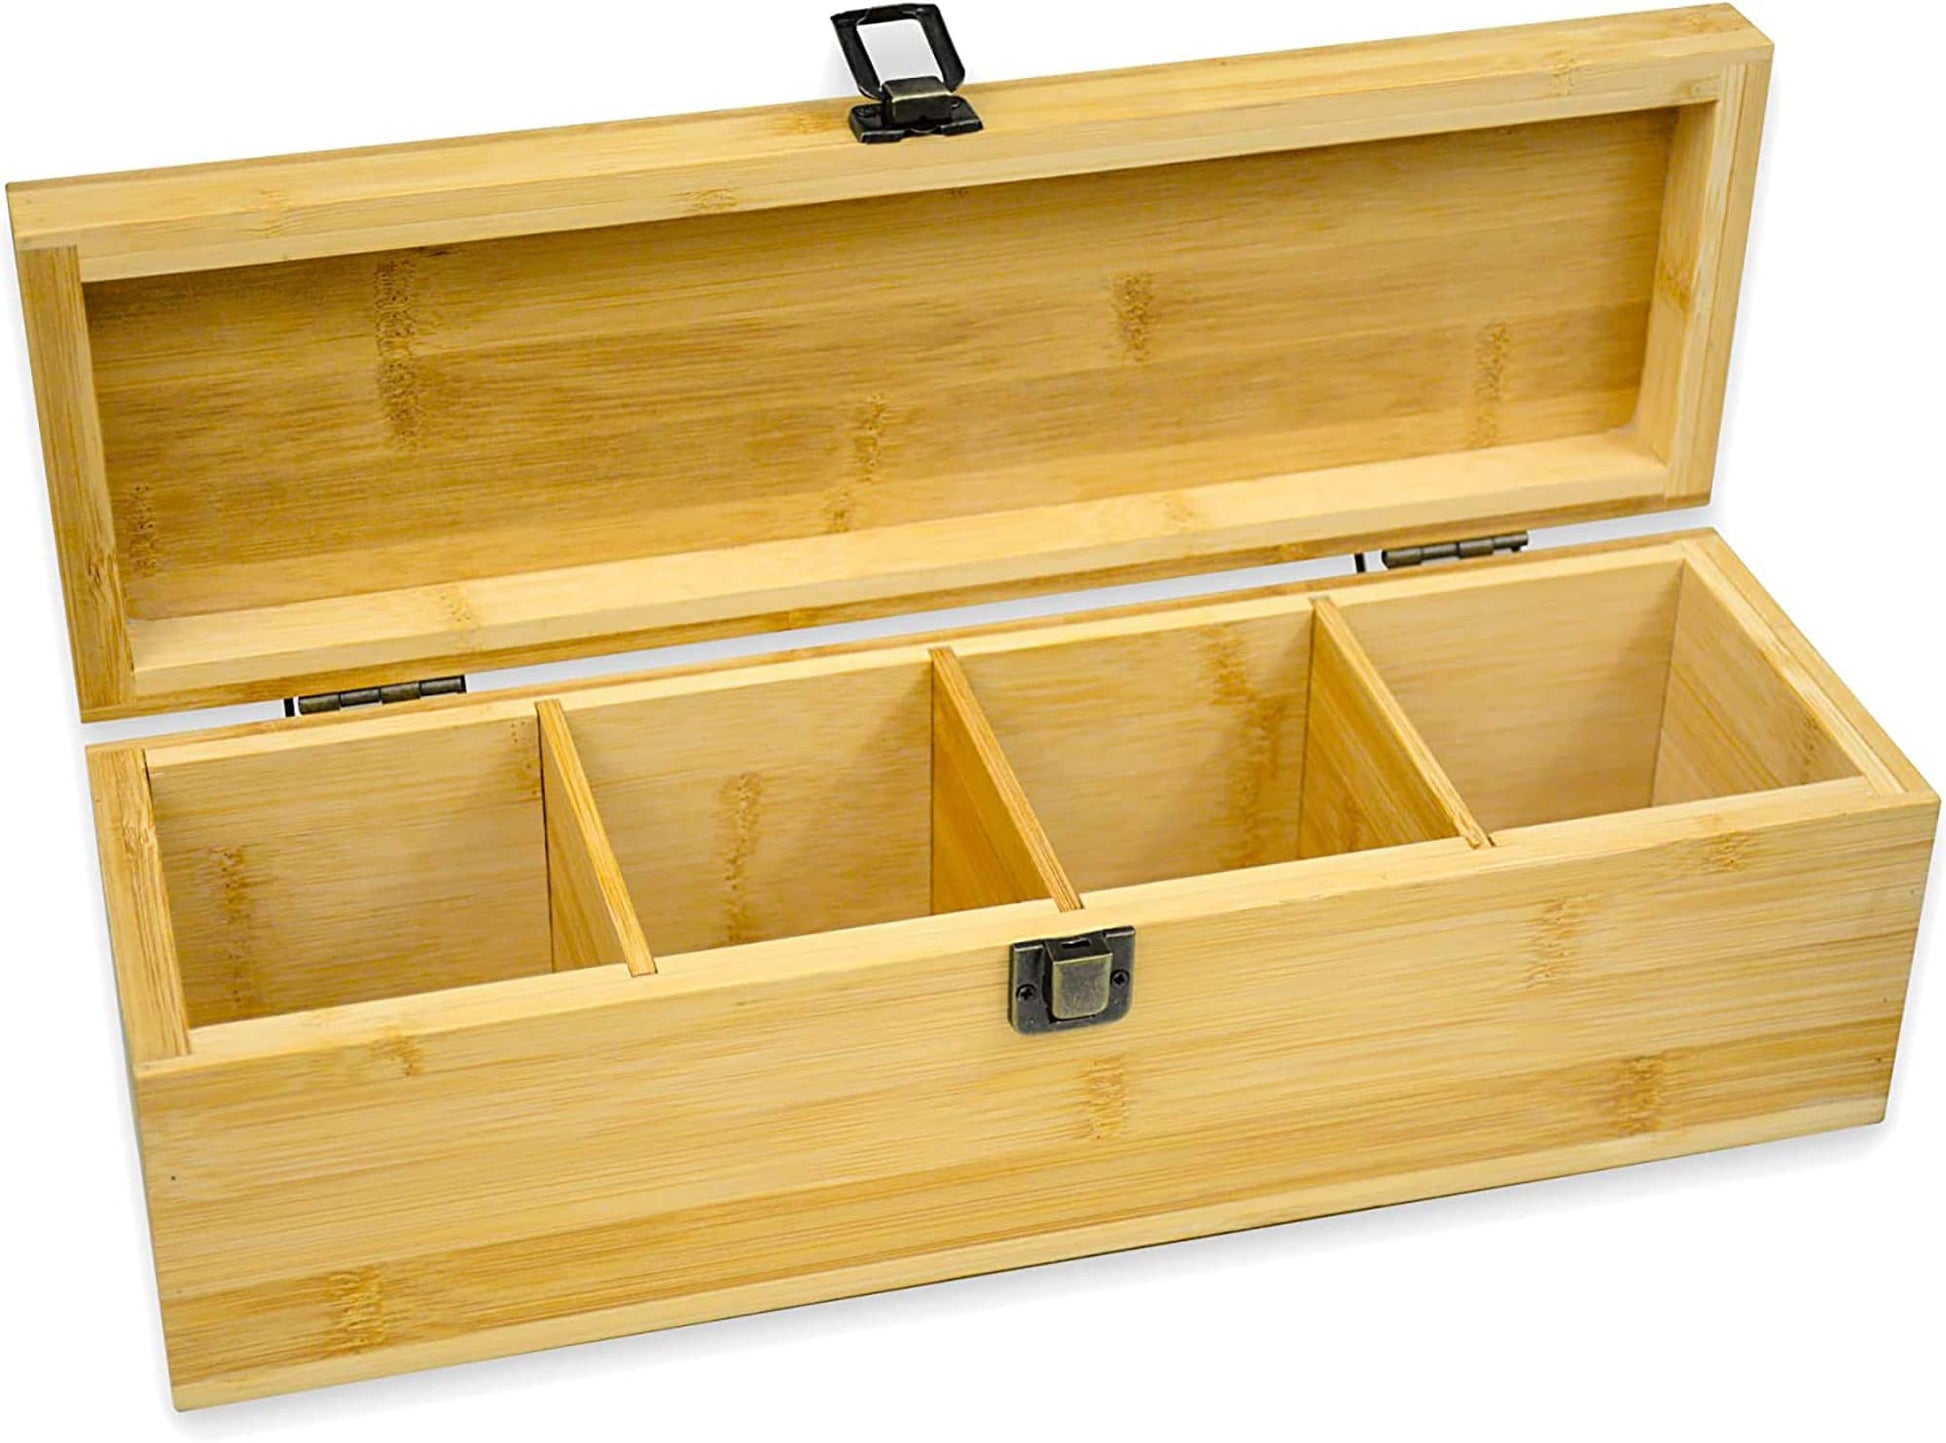 Bamboo Tea Organizer Box, Countertop Storage Chest with 4 Adjustable Slot Compartments | Minimalist, Purposeful, Moden, Rustic Kitchen Decor